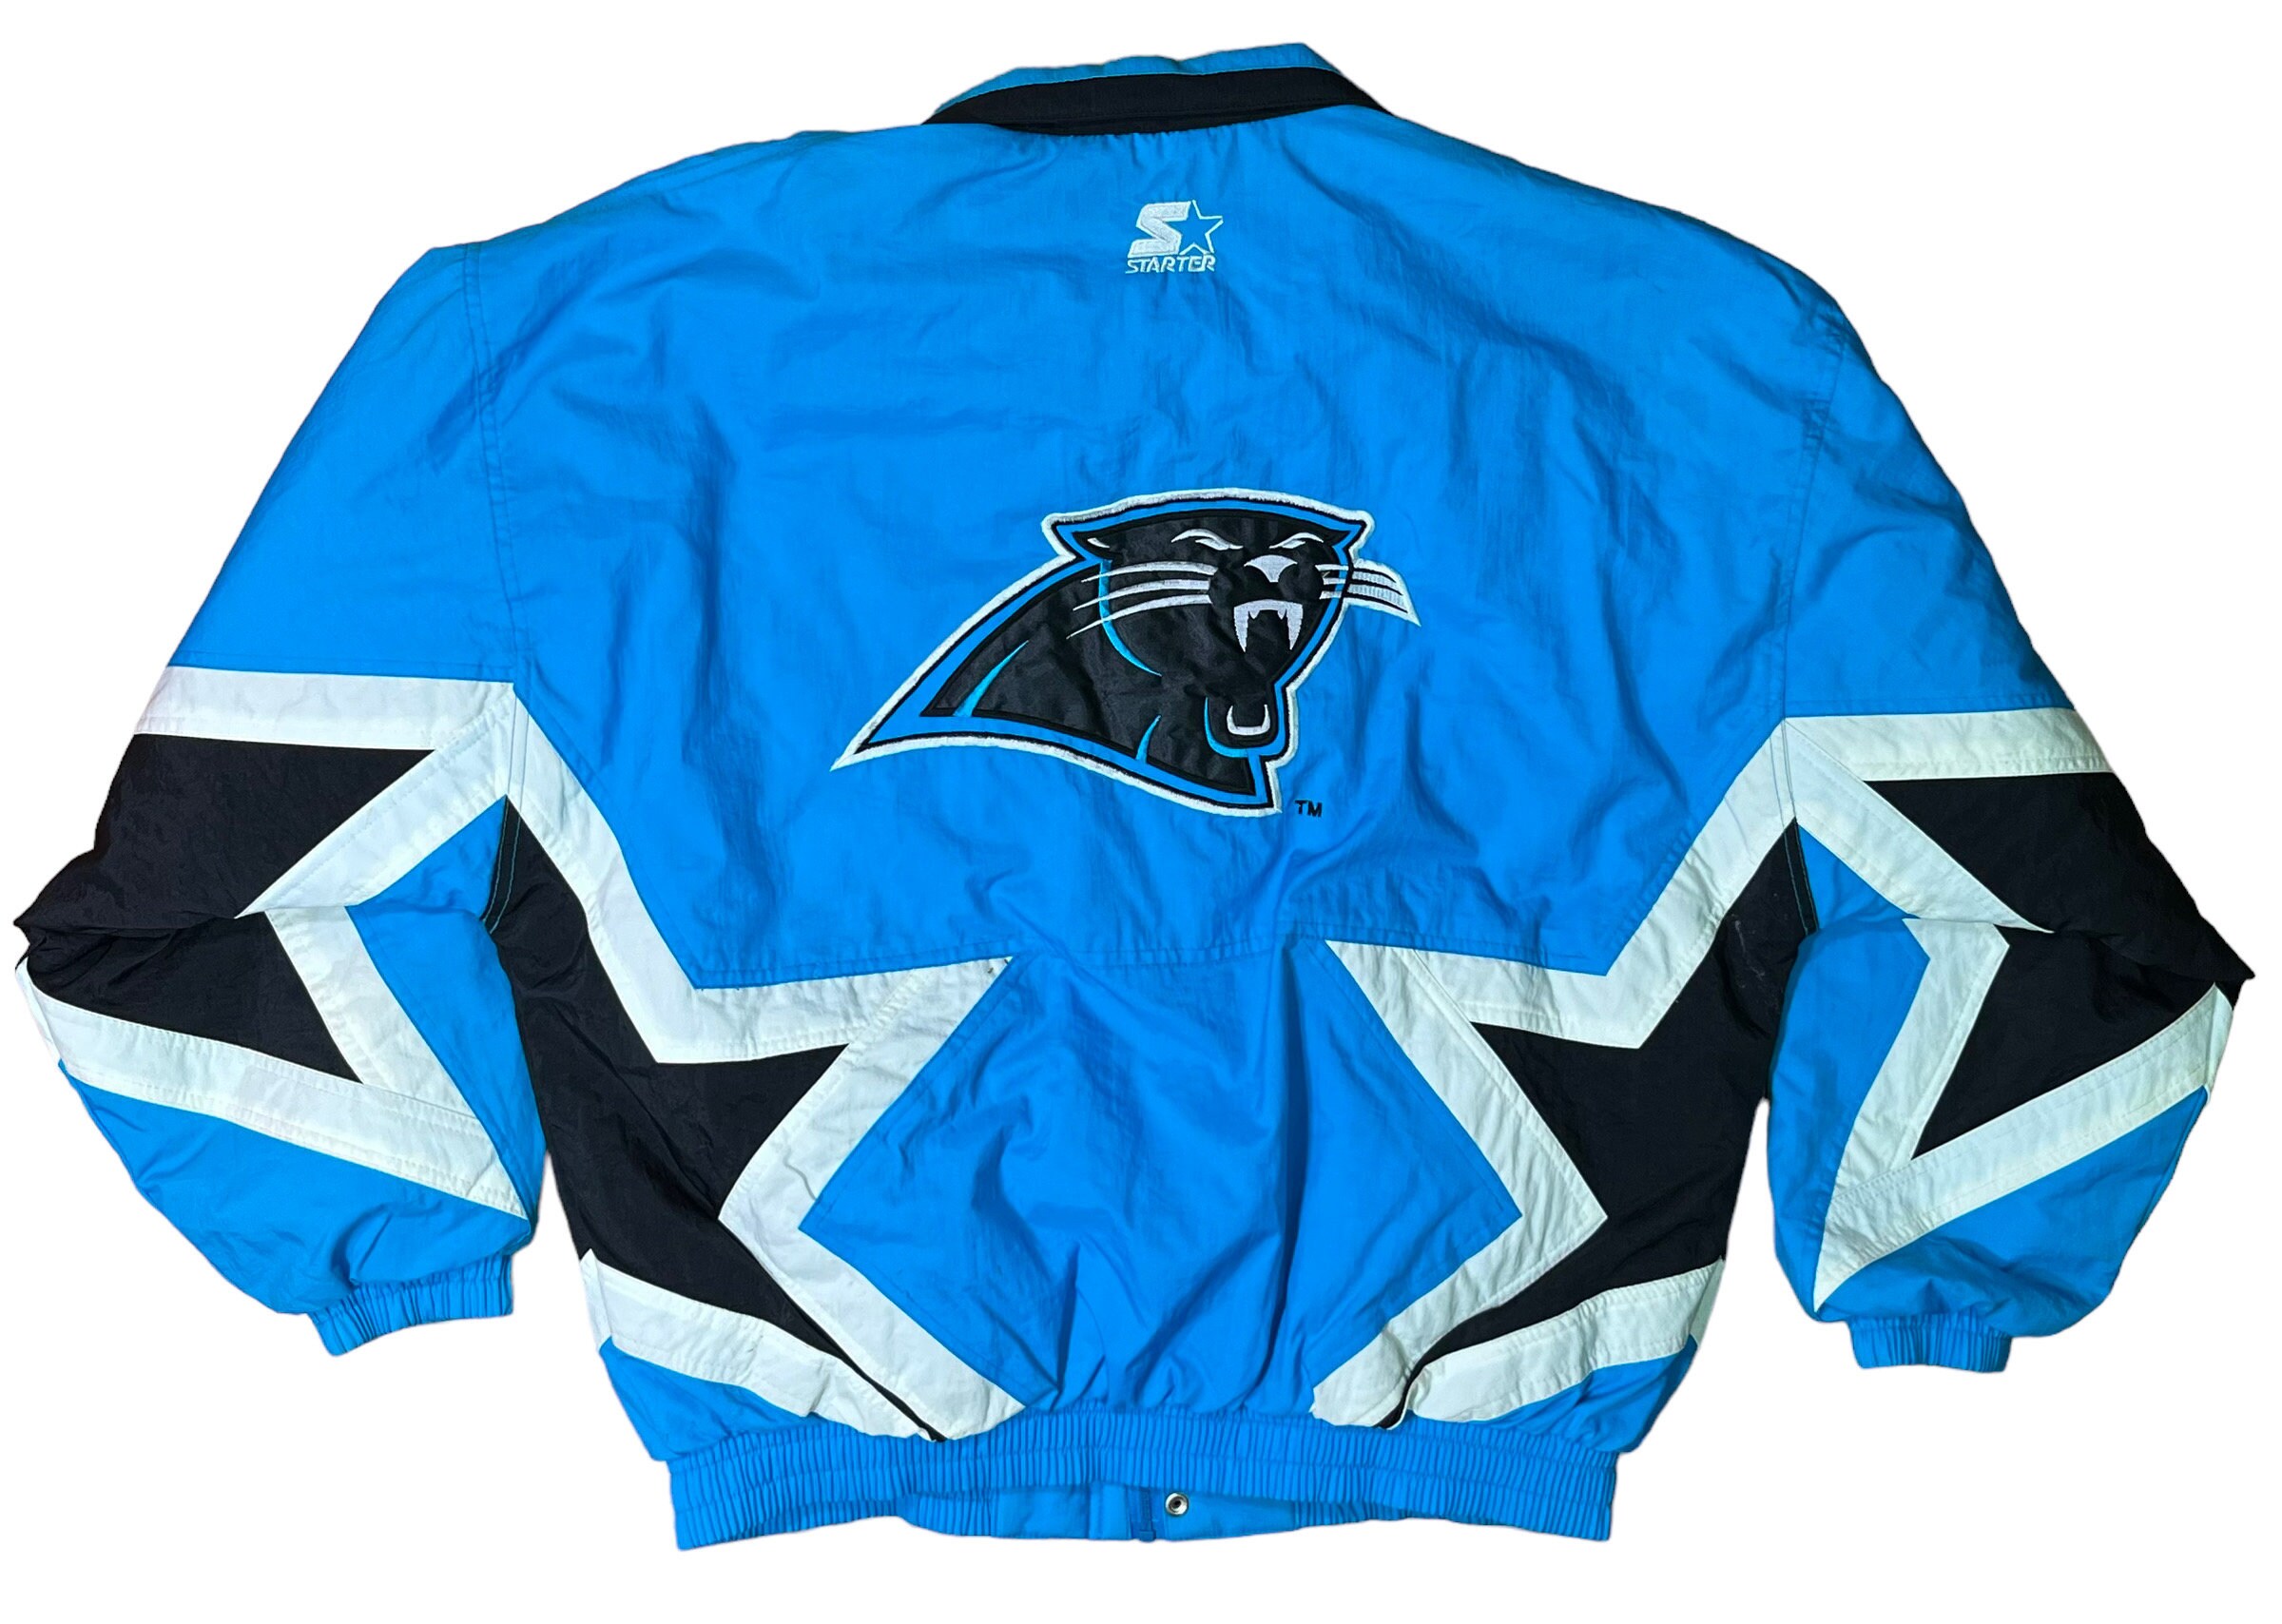 Carolina Panthers Throwback Jerseys, Vintage NFL Gear